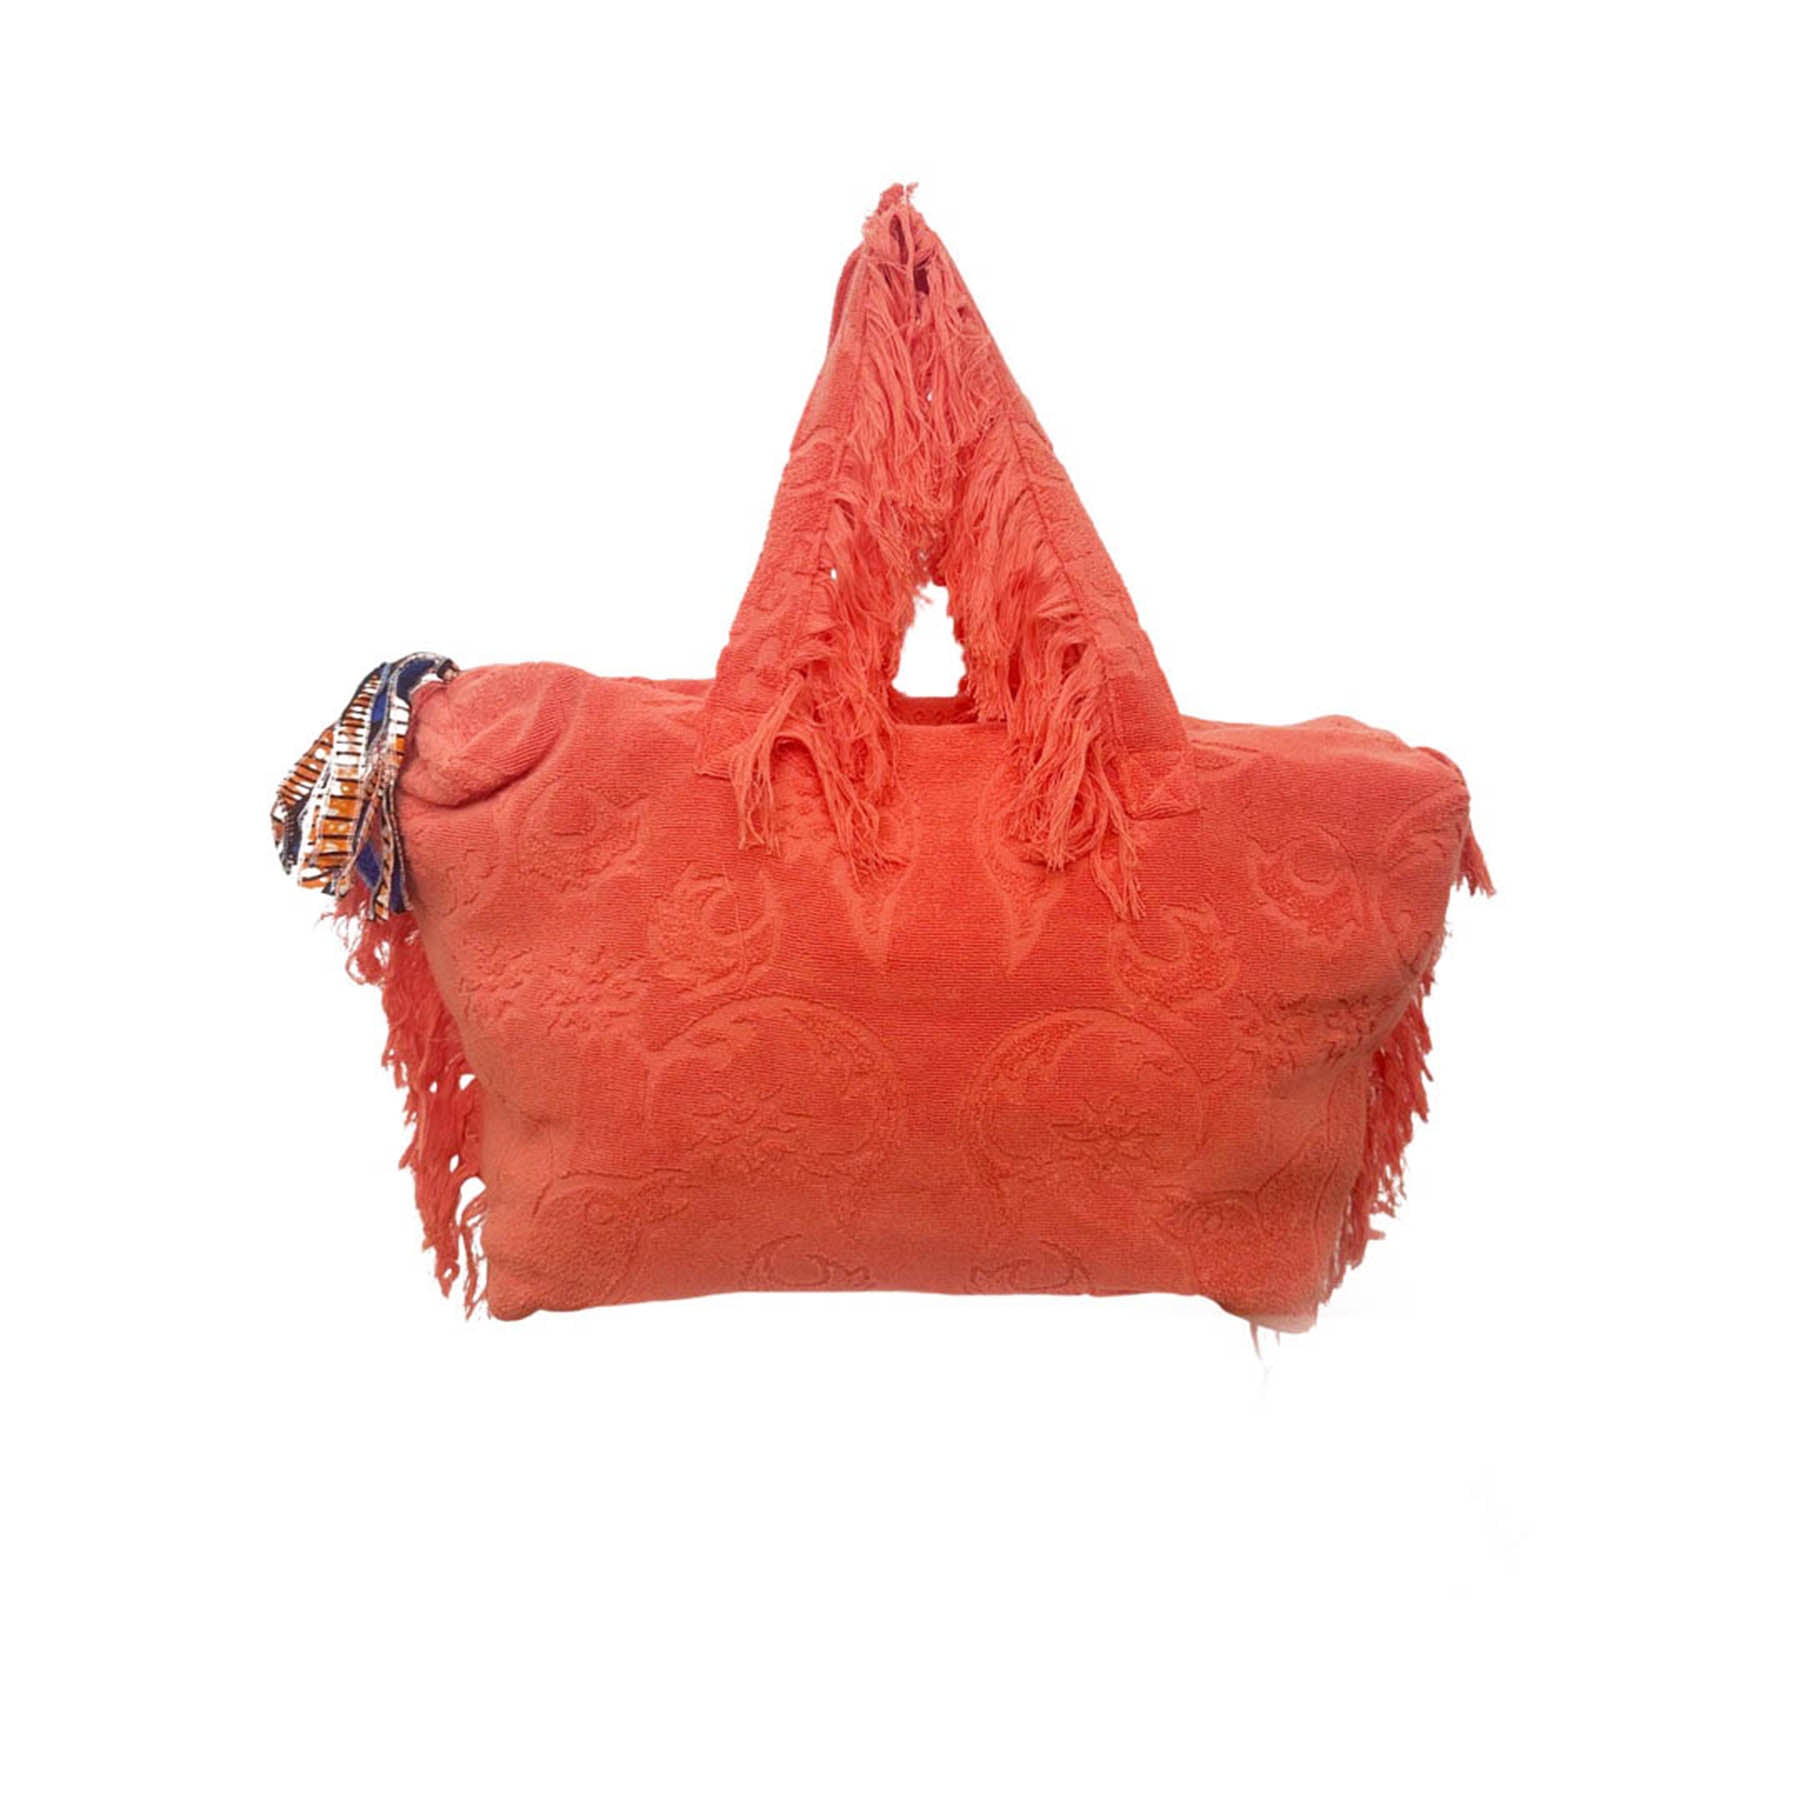 Lalla Marrakech Tasche Frottee Hippy Socco Orange - KNOCKNOK Fashion